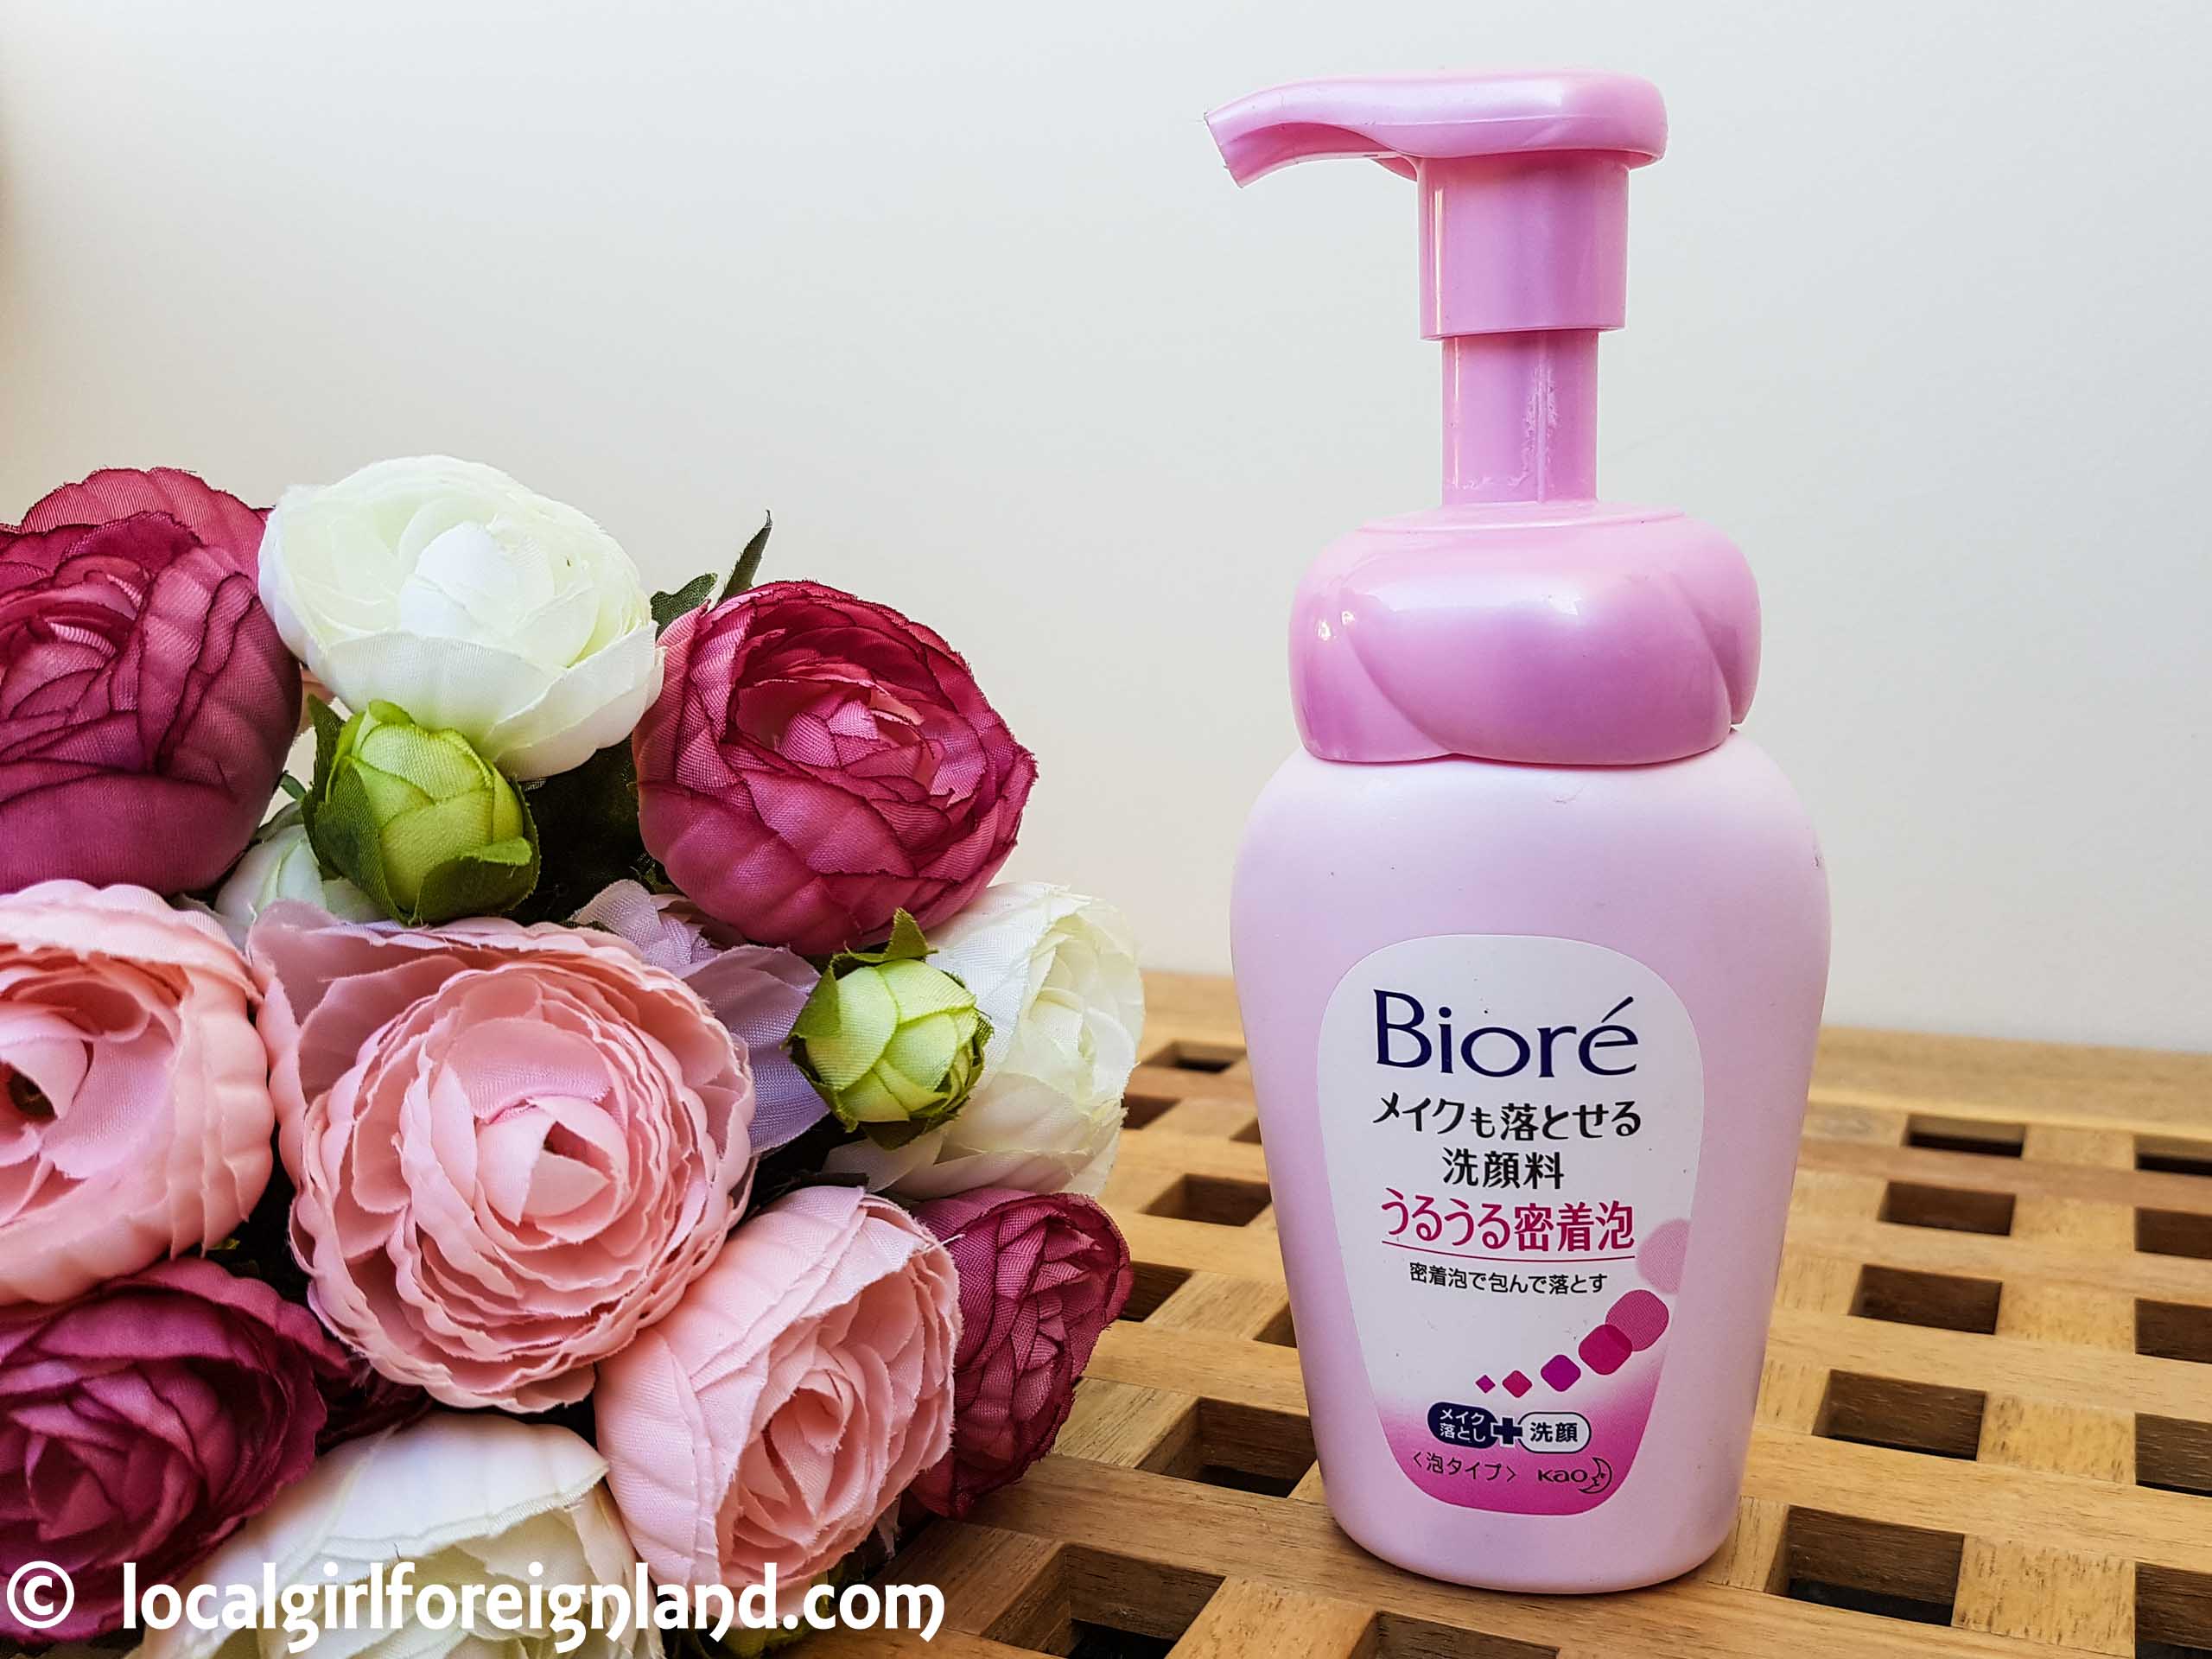 Bioré Makeup Removing Cleansing foam (ururu instant foaming wash), empties review